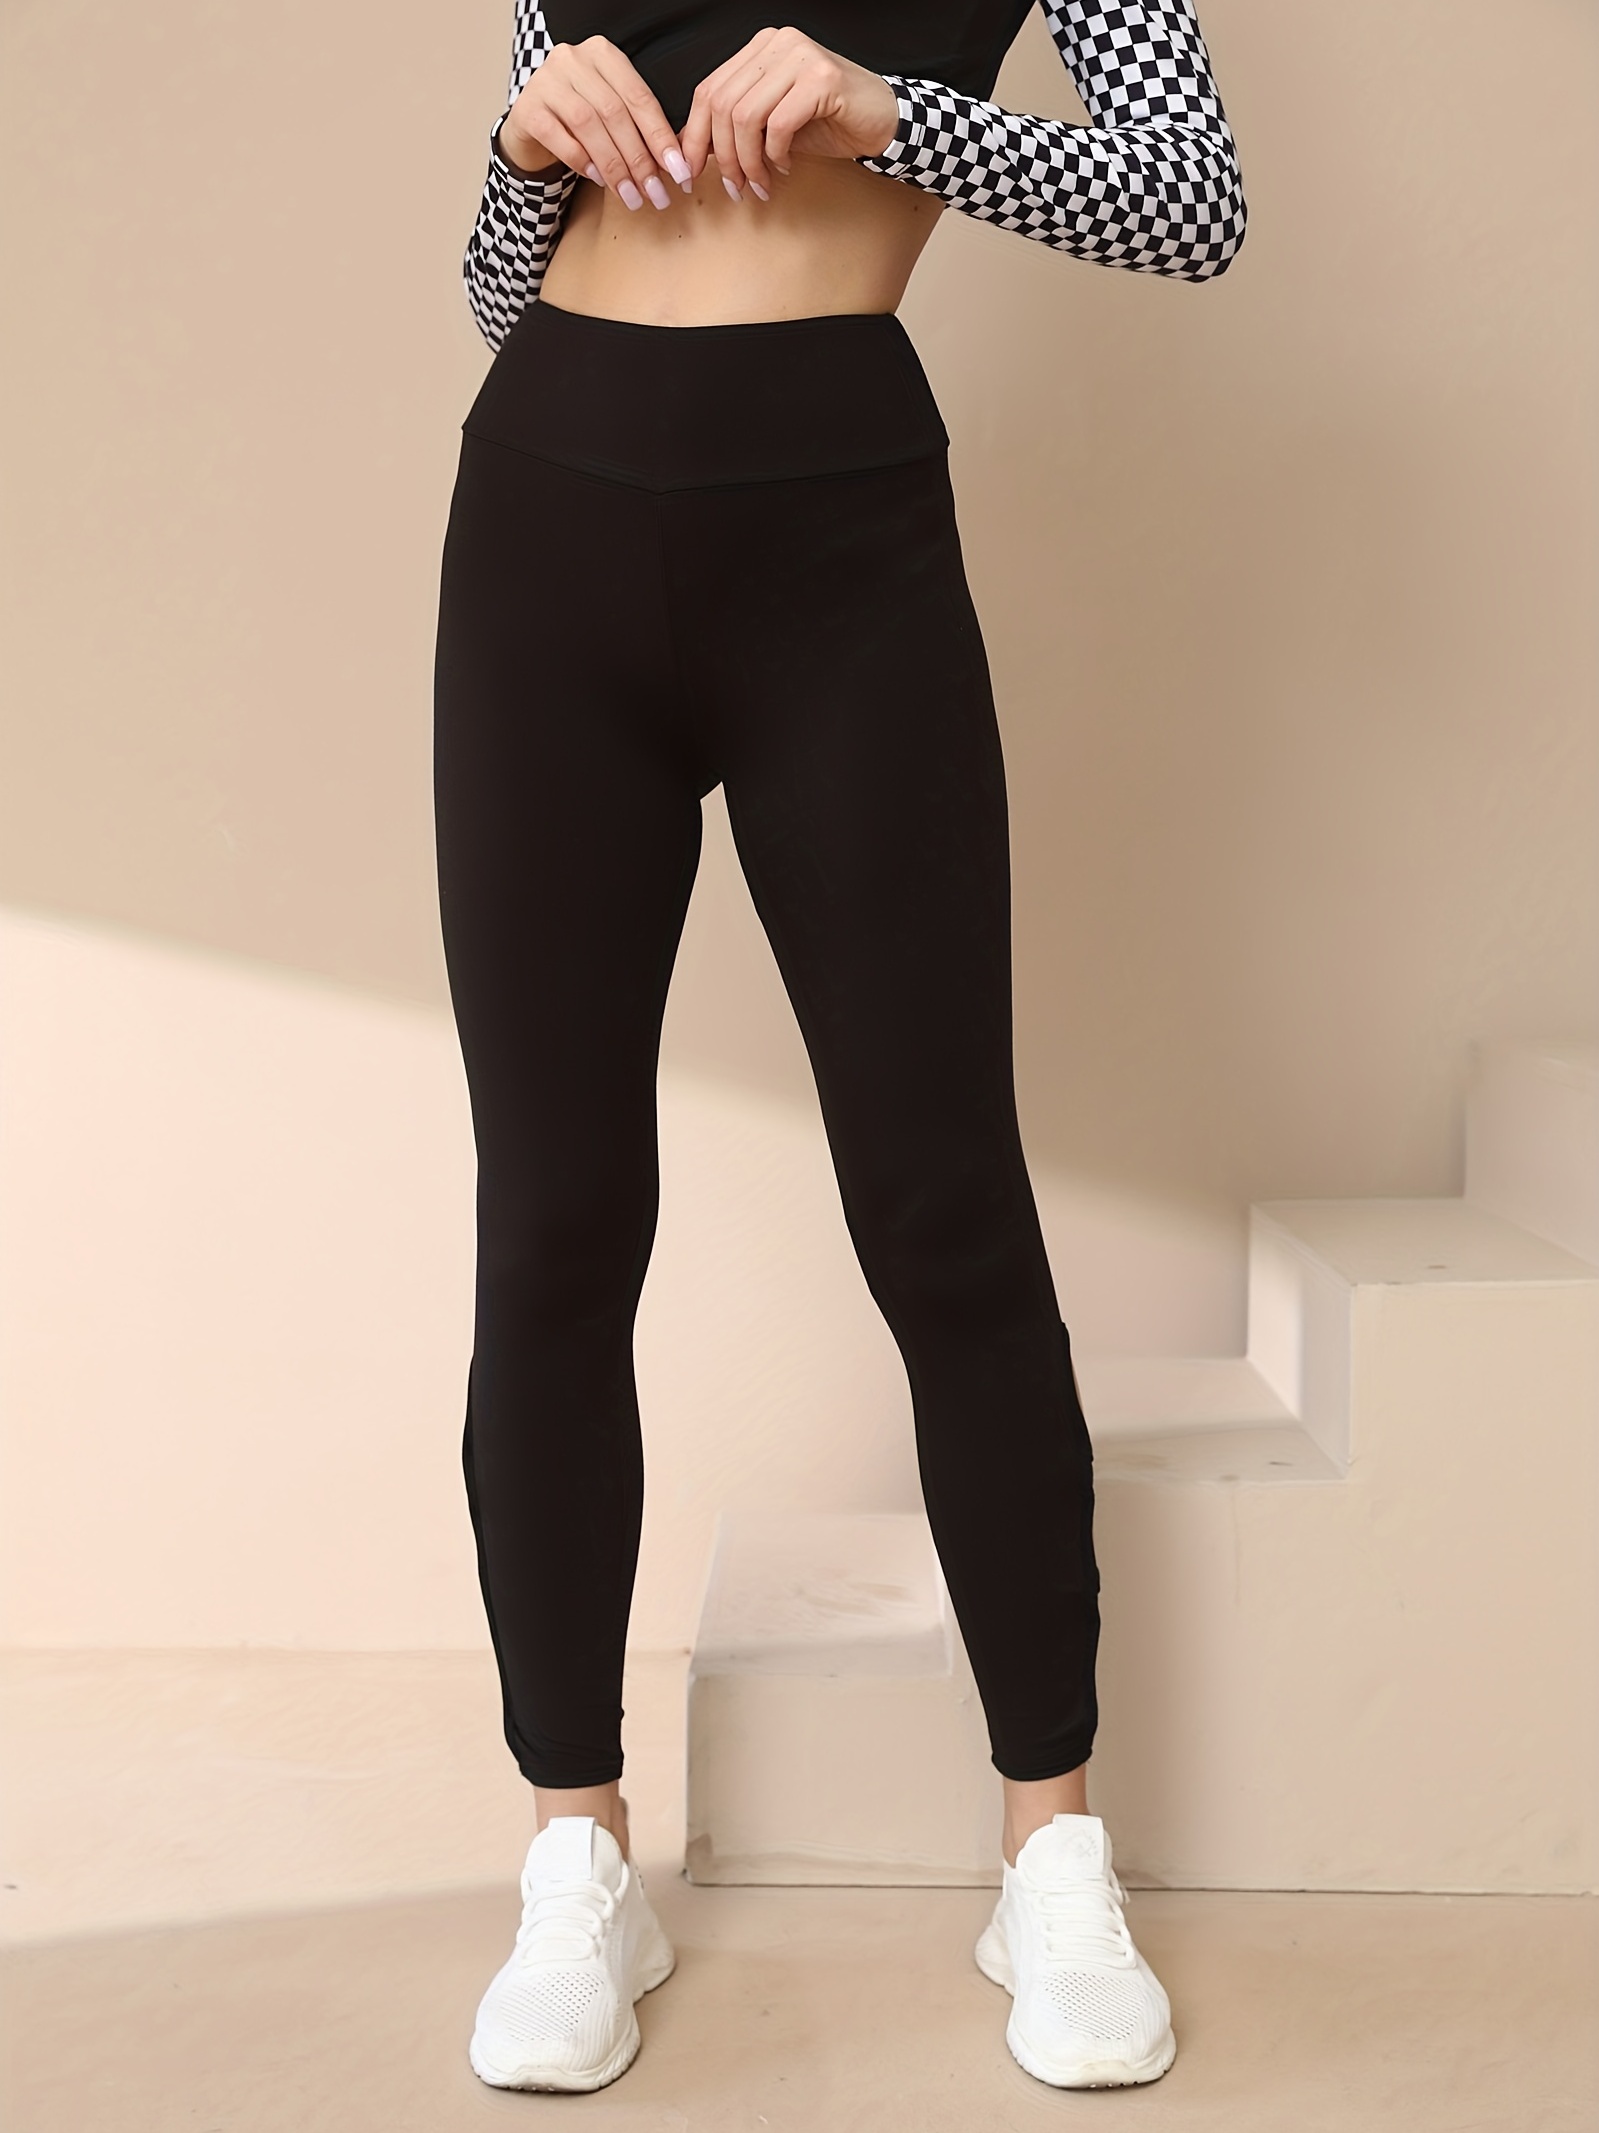 Women's Yoga Pants Yoga Leggings Criss Cross Waist Tummy Control Butt Lift  Quick Dry High Waist Yoga Fitness Gym Workout Leggings Bottoms Black Dark N